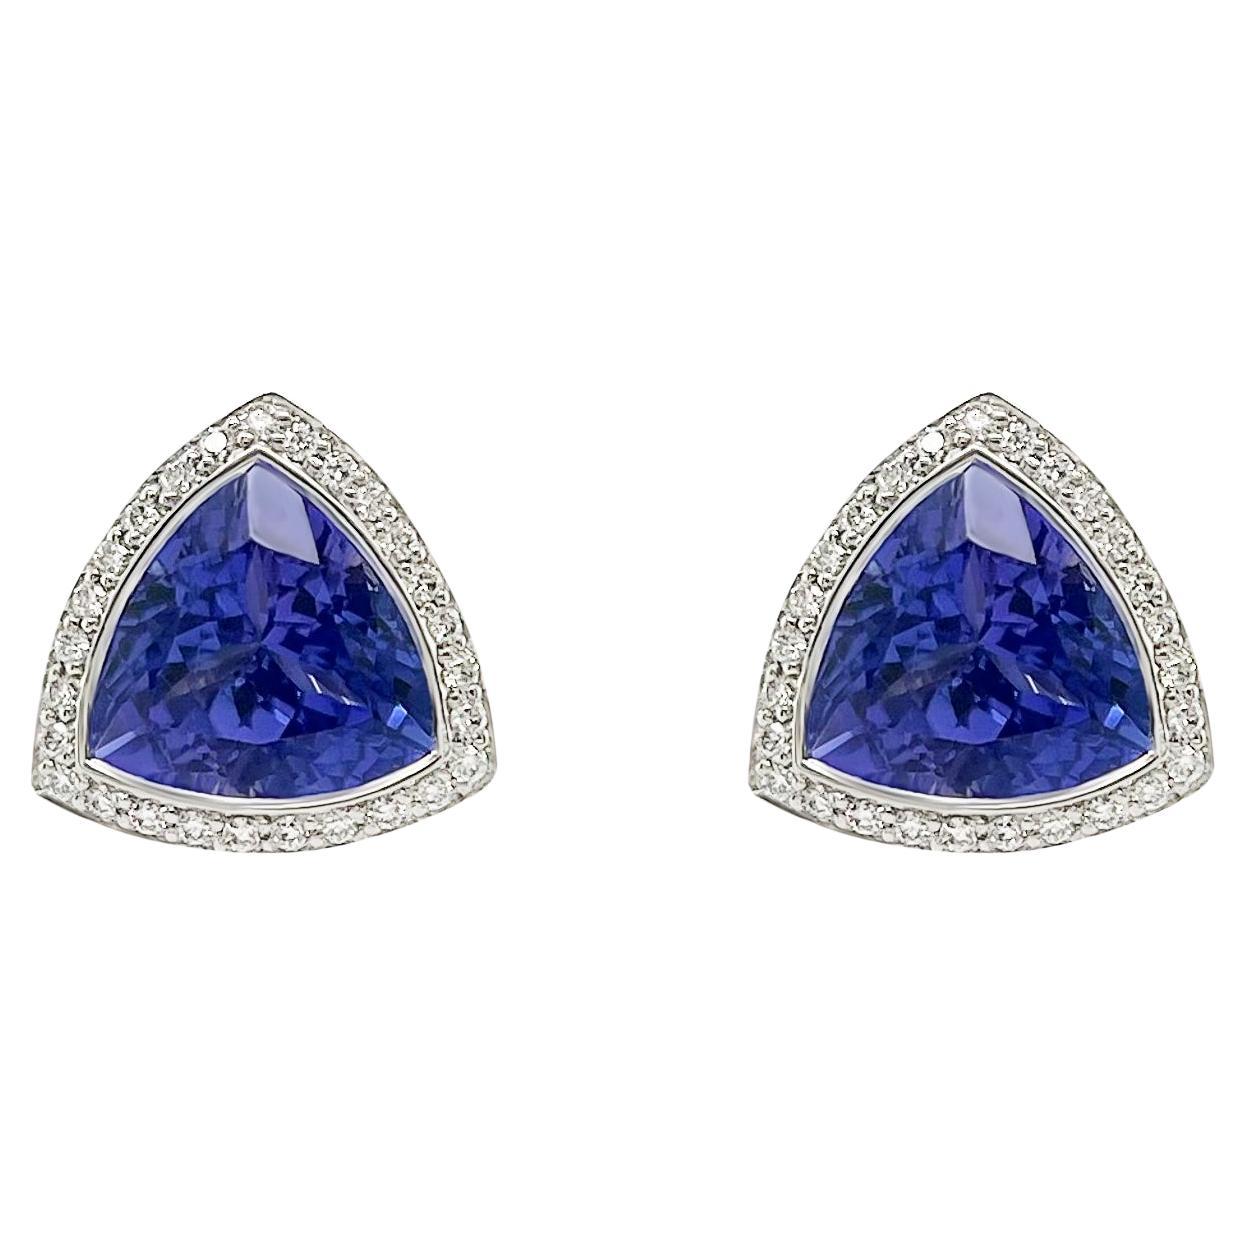 3.61 Carat Trillion Cut Tanzanite Diamond Halo Studs Earrings in 18k White Gold For Sale